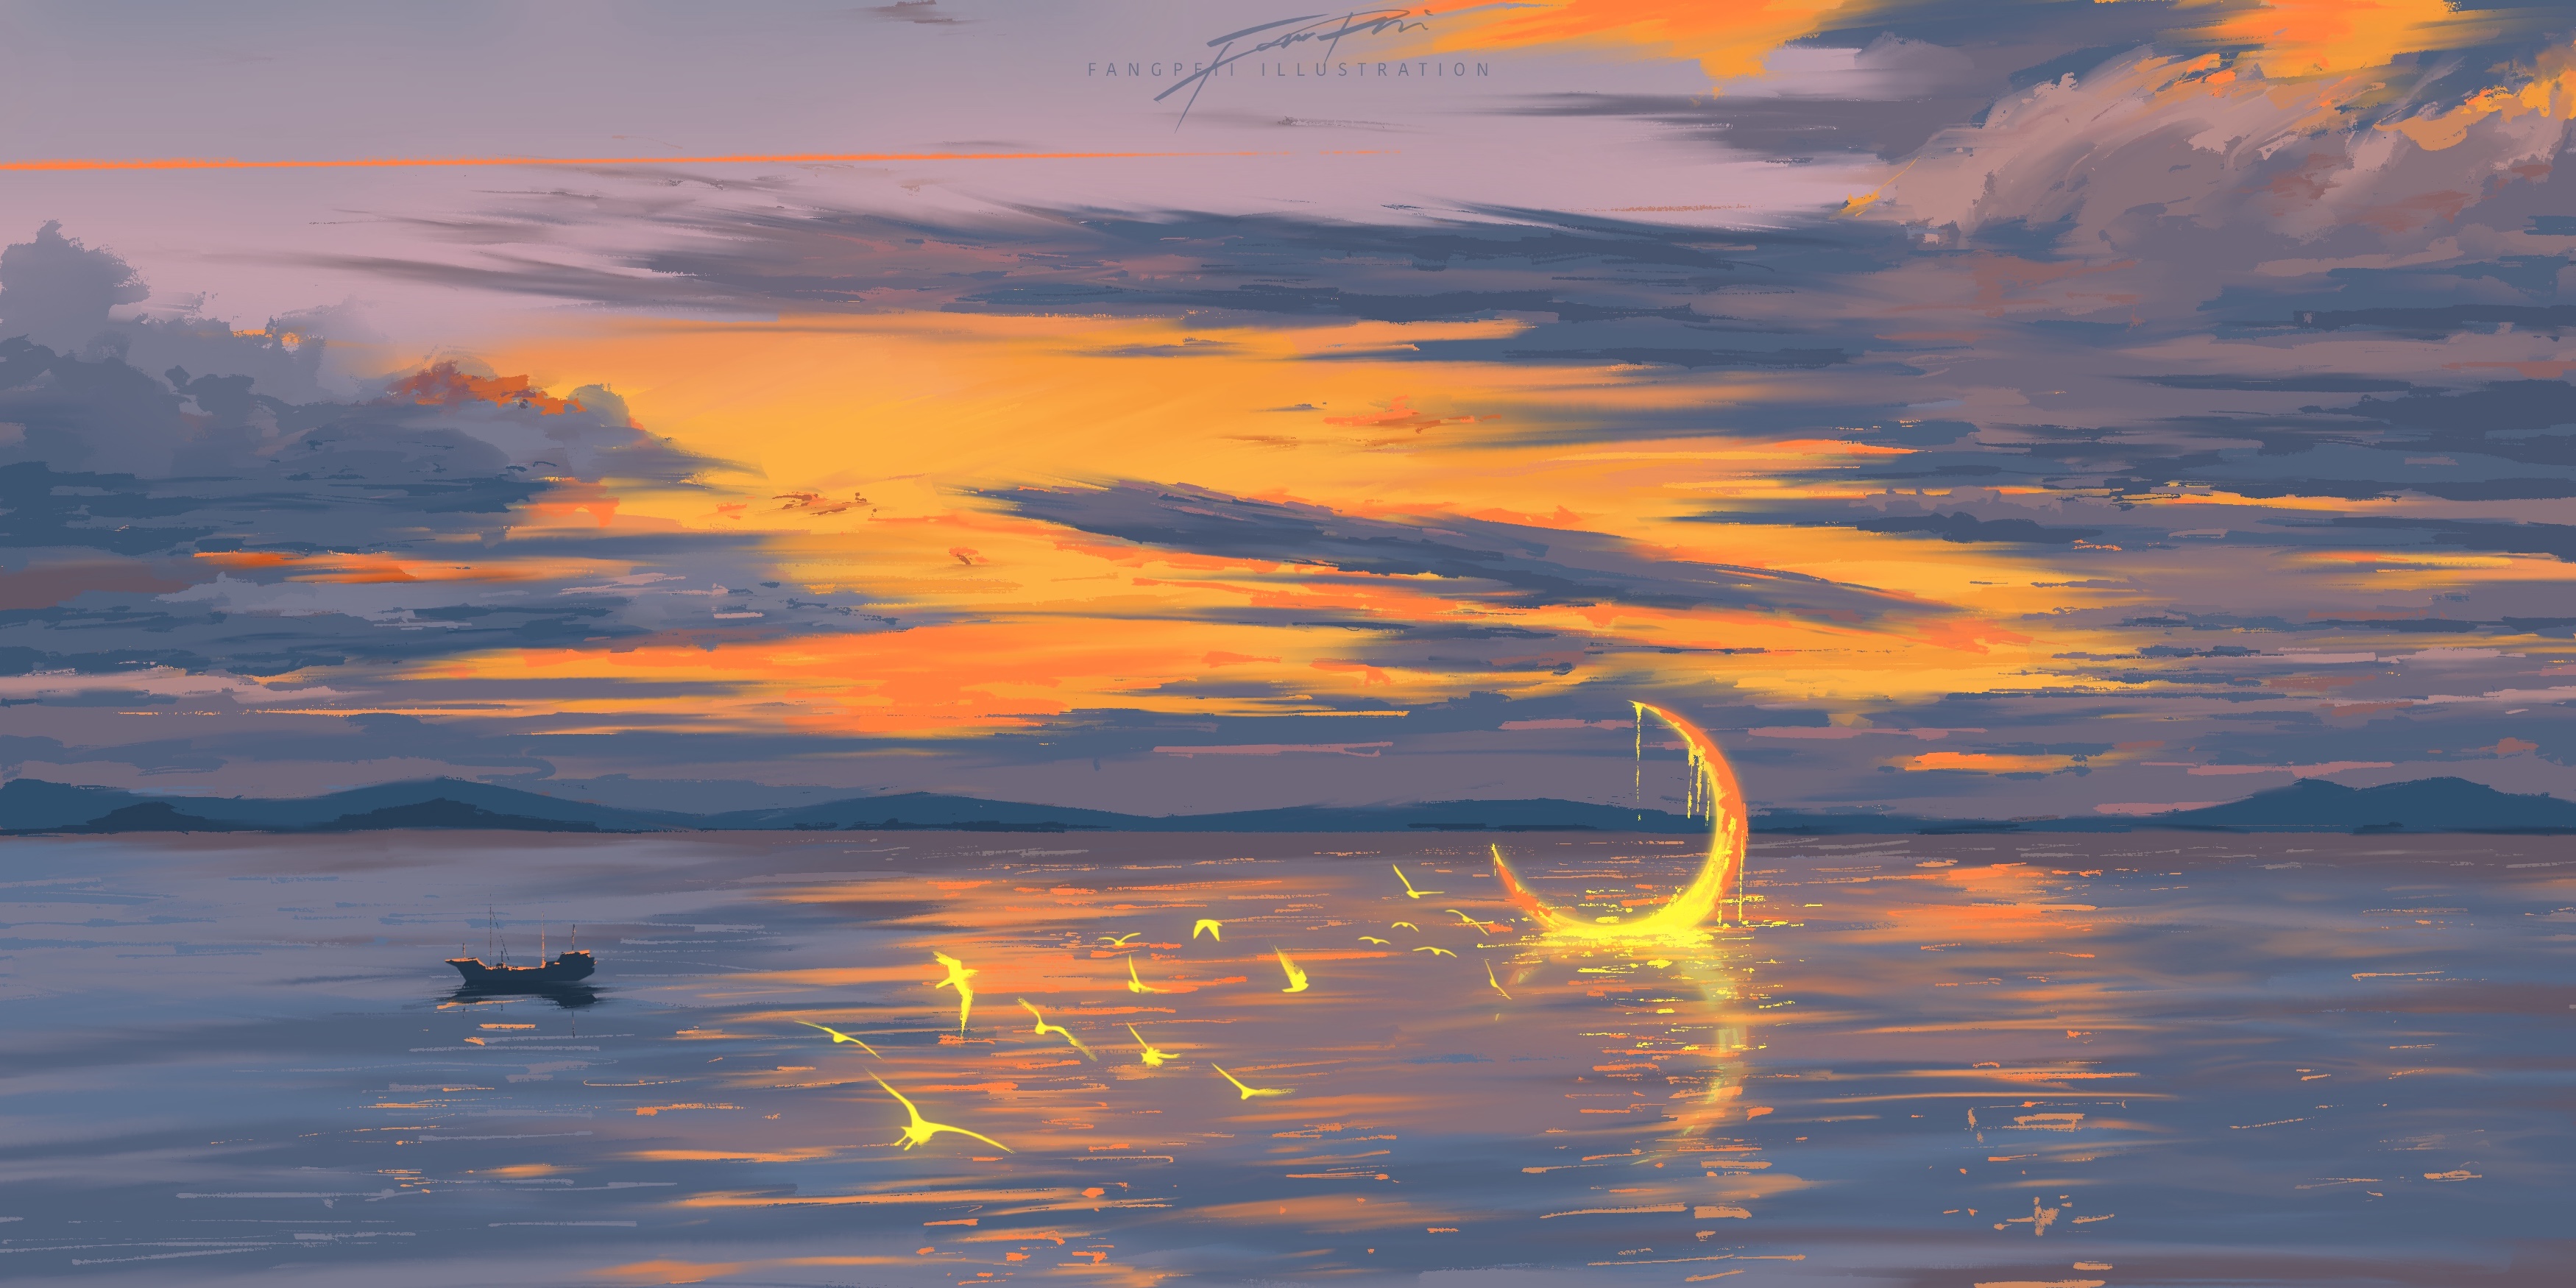 General 3500x1750 digital art fantasy painting landscape Moon sky Fangpeii boat crescent moon